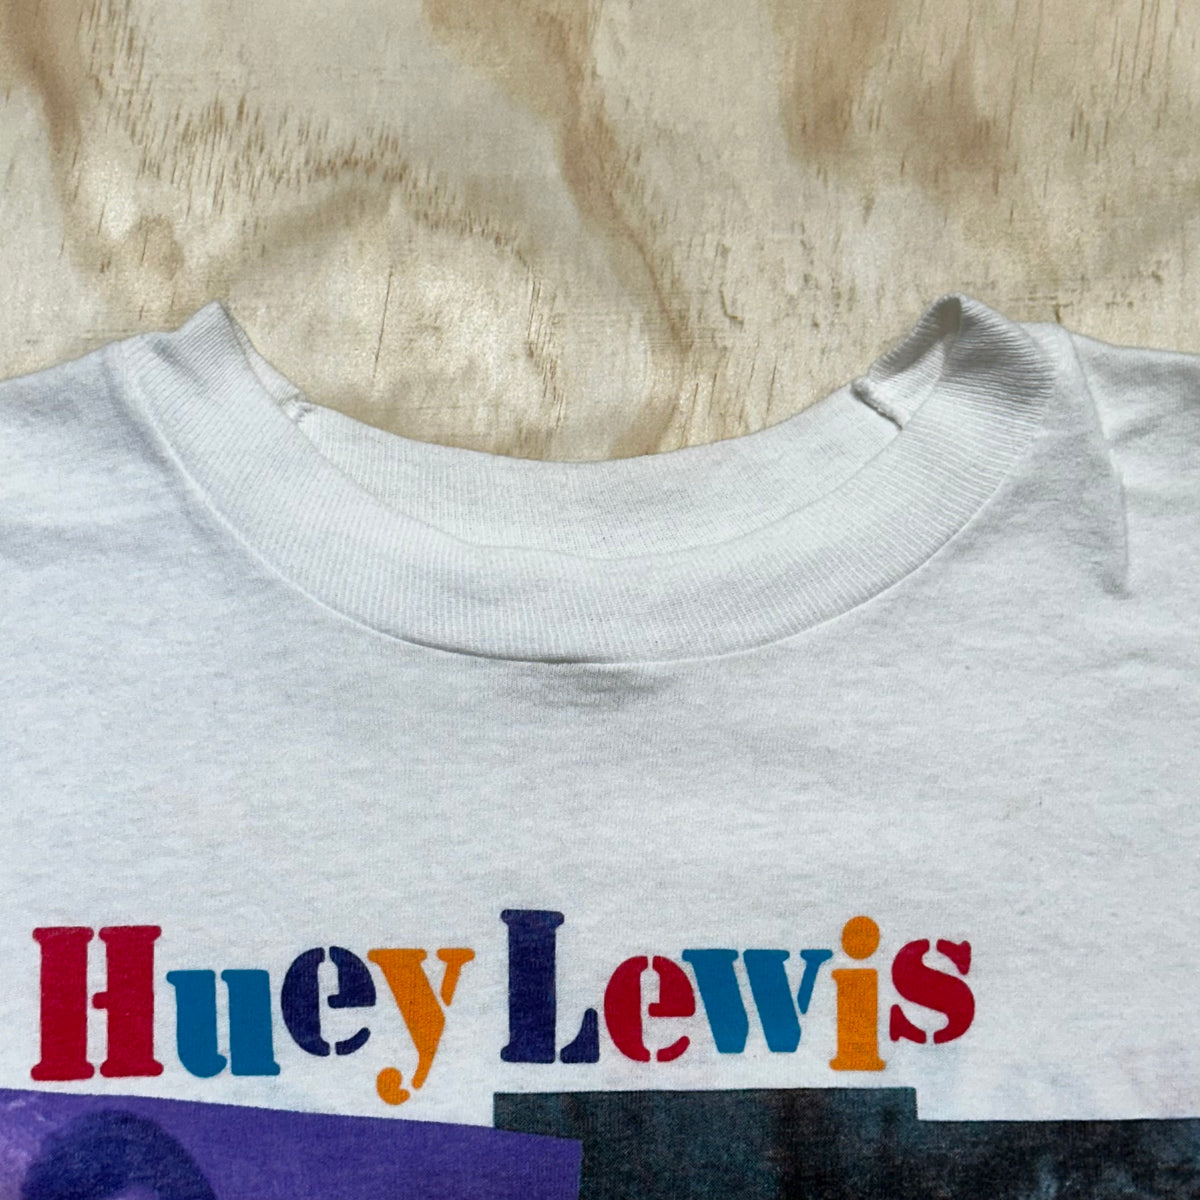 Vintage 90s Huey Lewis shirt Hard At Play 1991 Tour T-Shirt